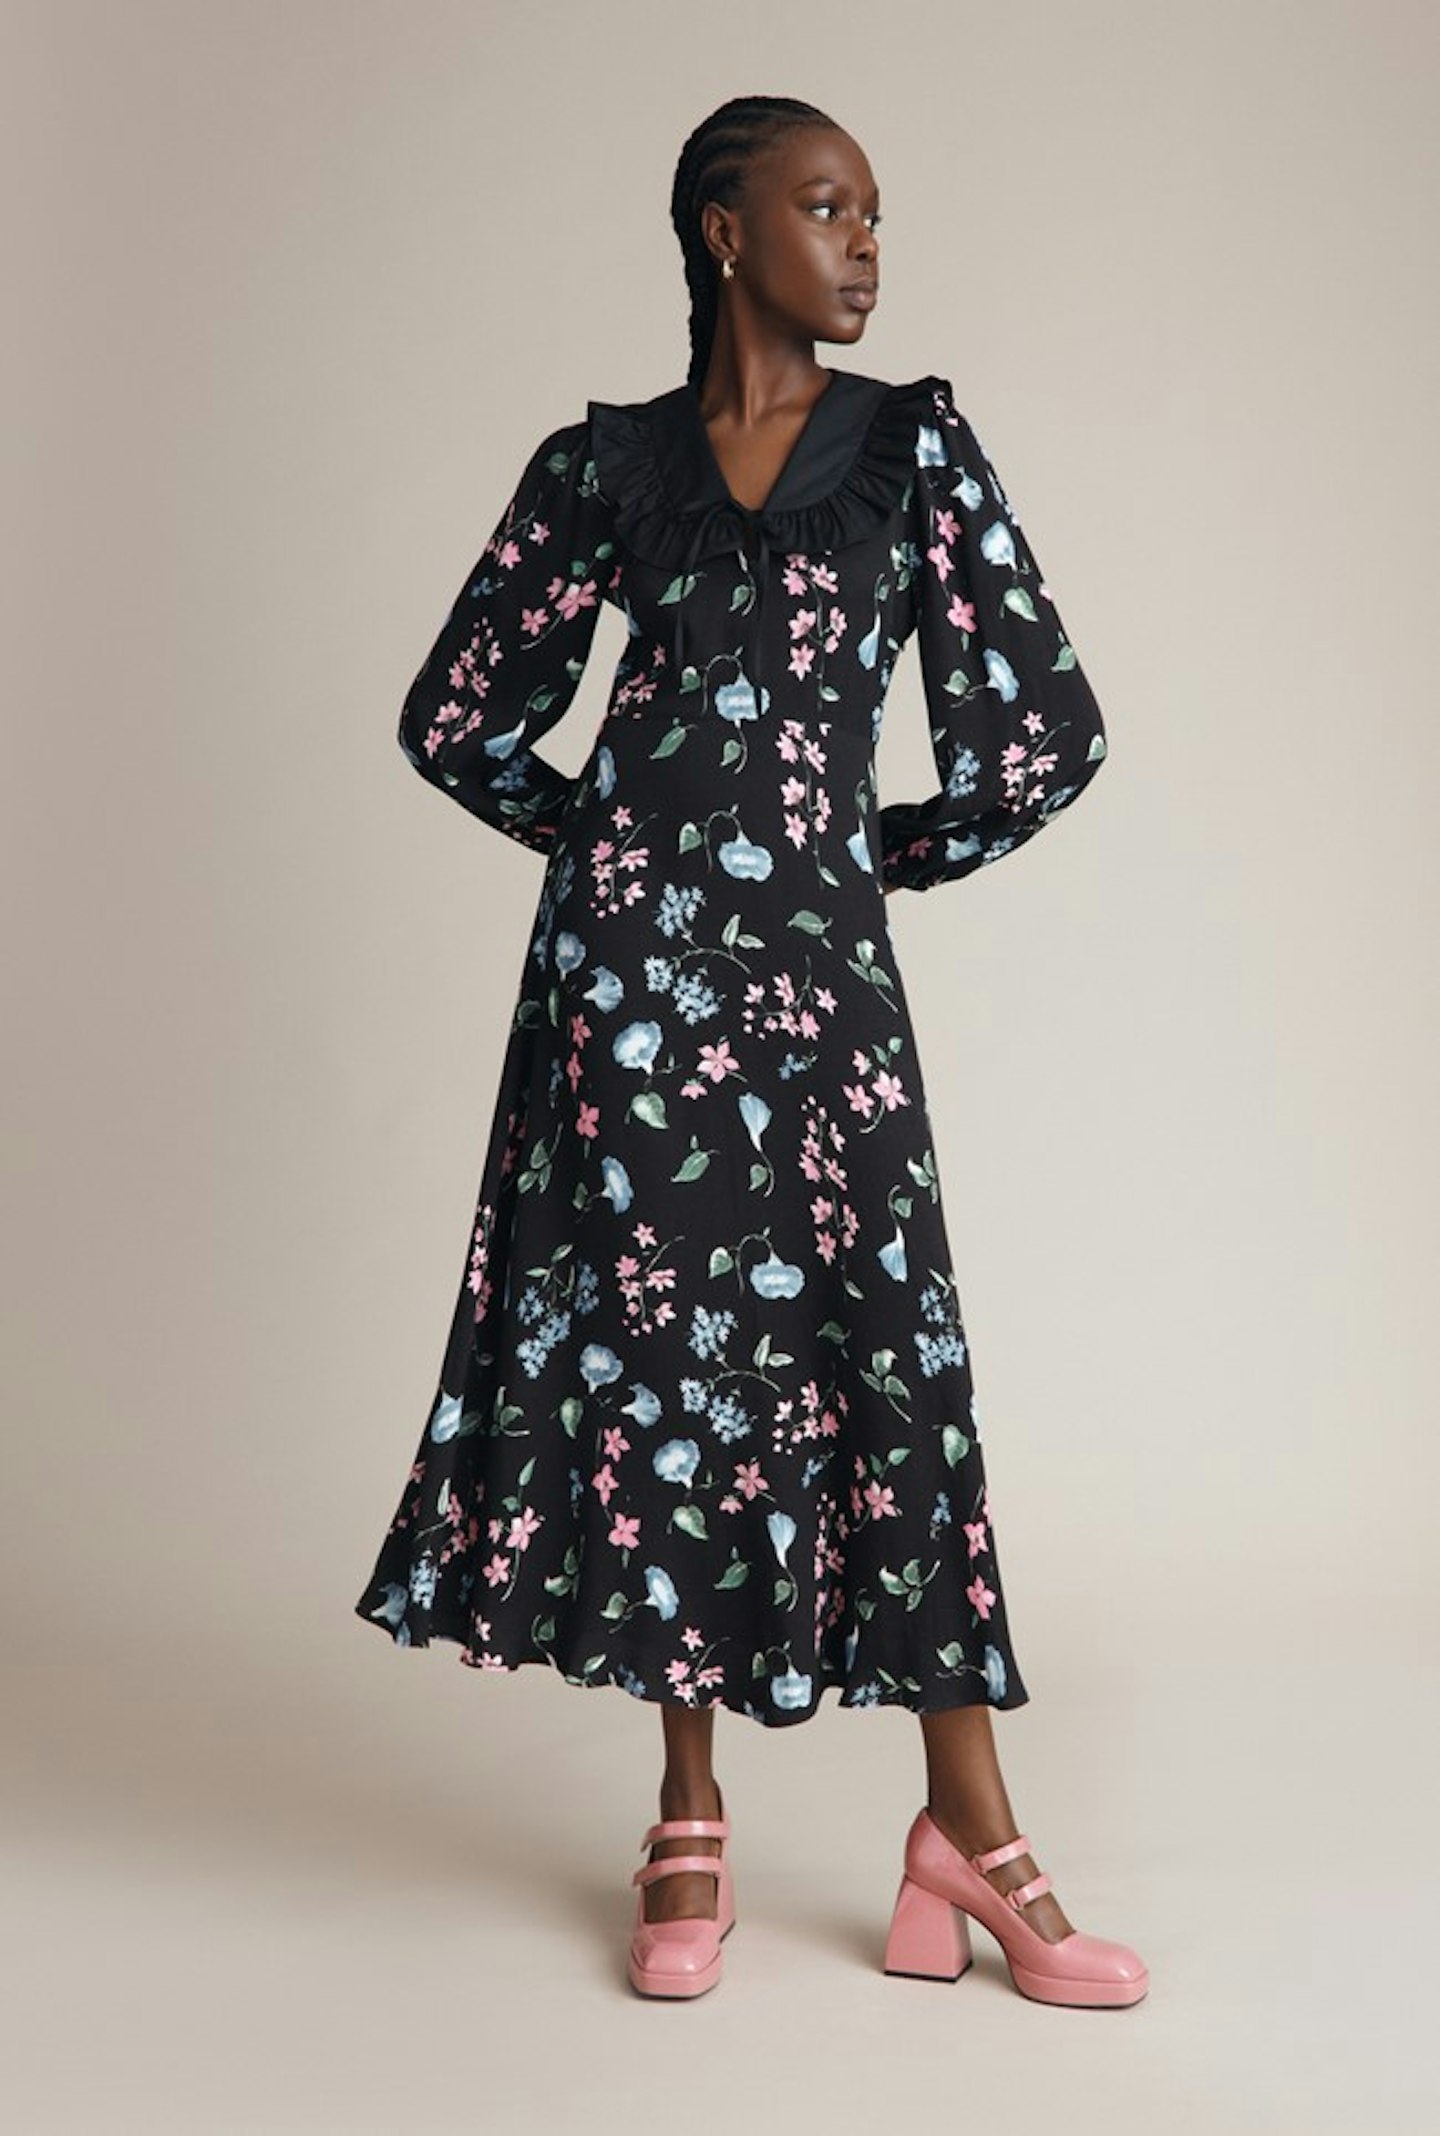 Ghost, Dixie Dress Black Floral, £169